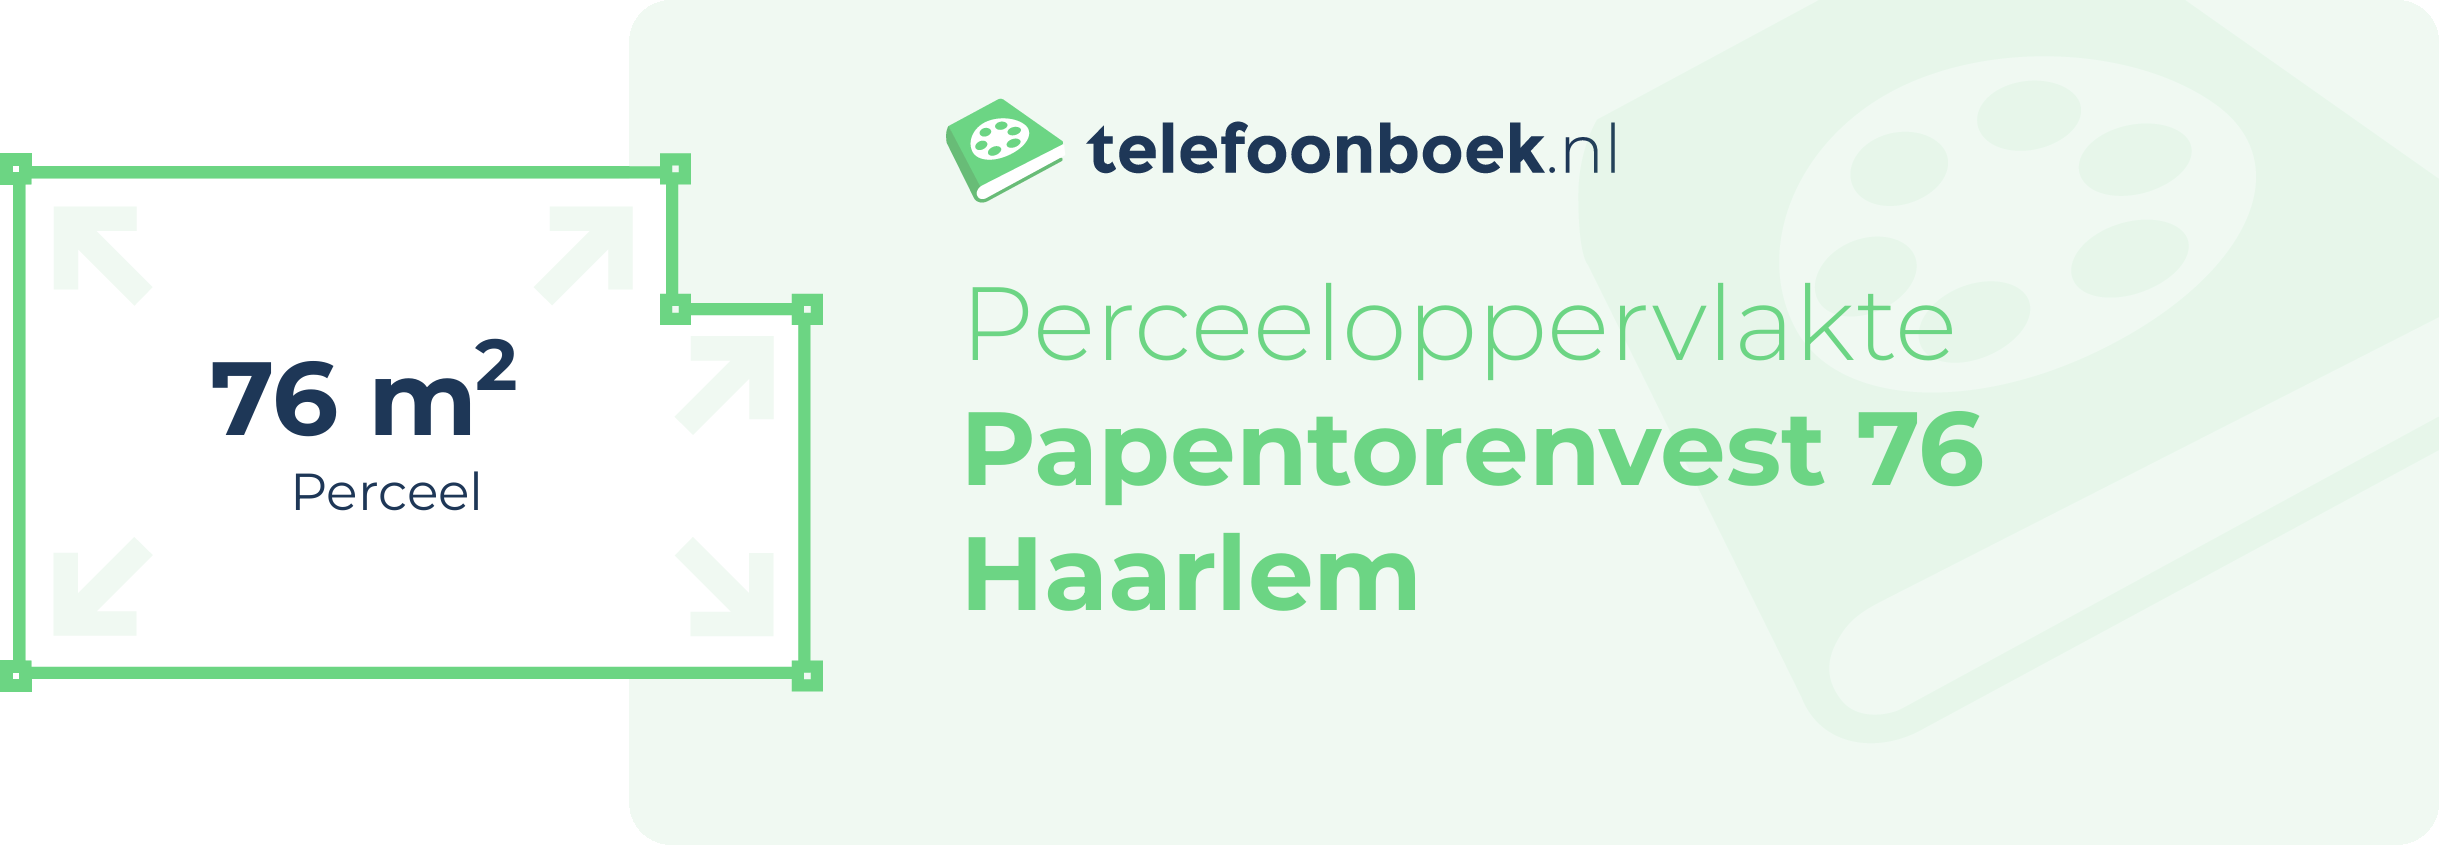 Perceeloppervlakte Papentorenvest 76 Haarlem